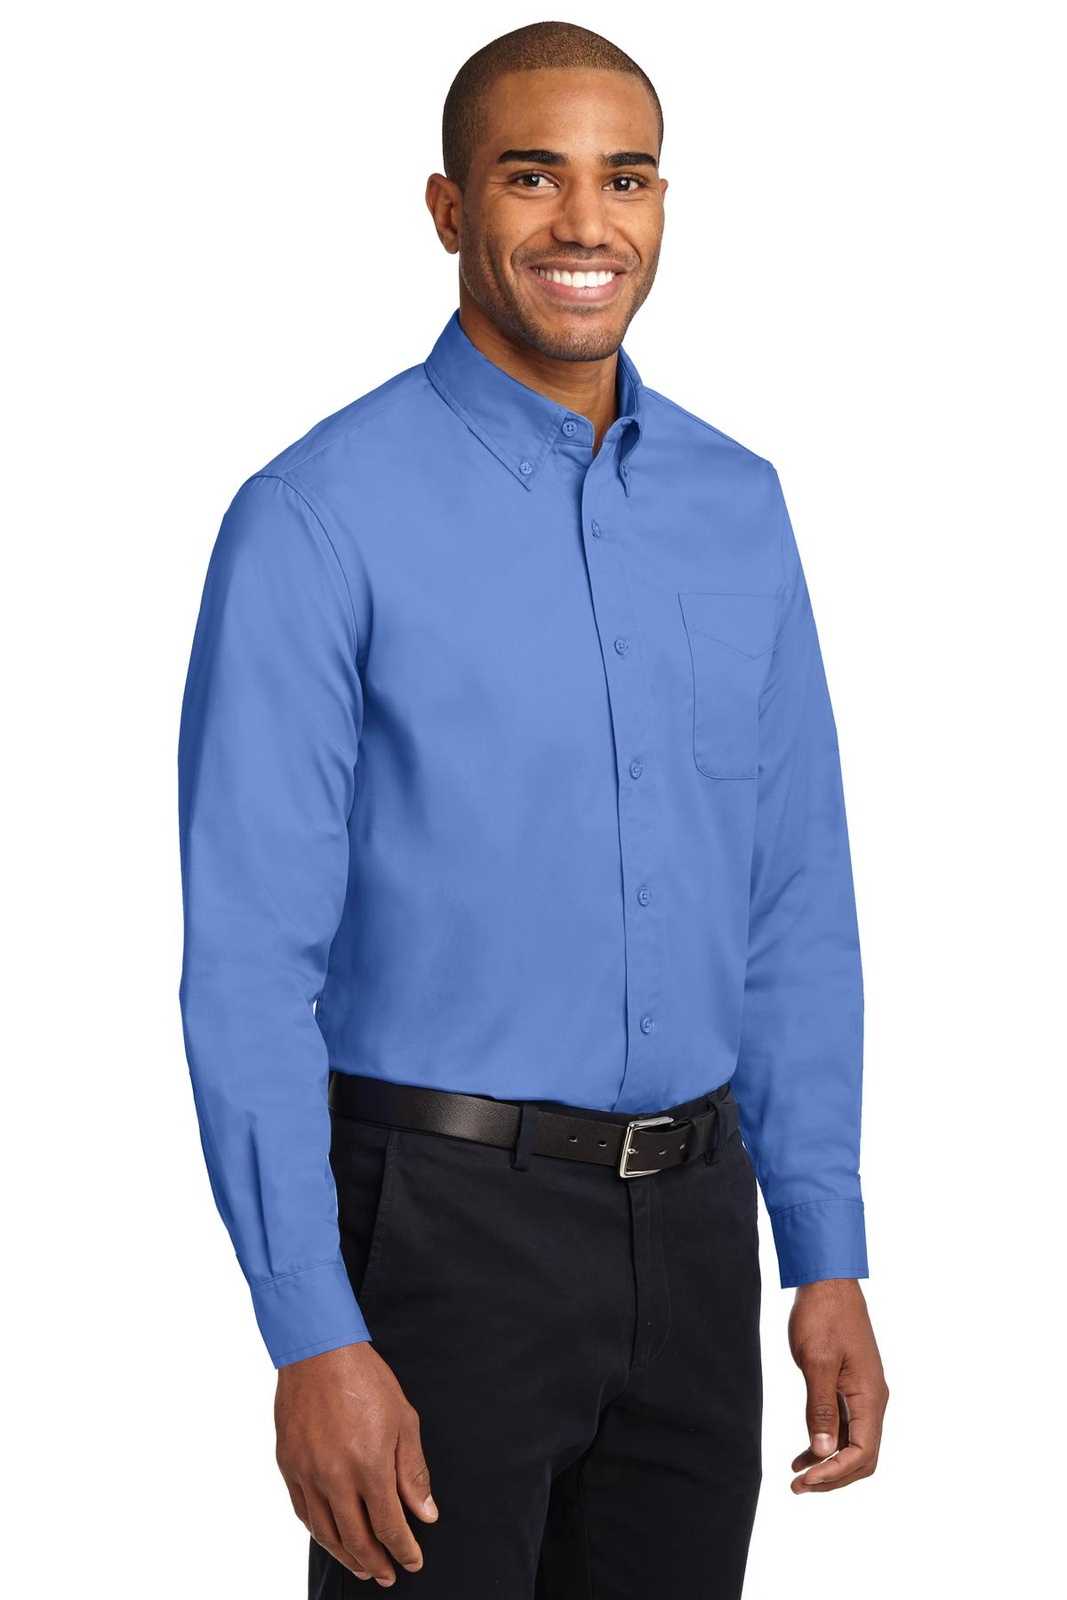 Port Authority S608 Long Sleeve Easy Care Shirt - Ultramarine Blue - HIT a Double - 4